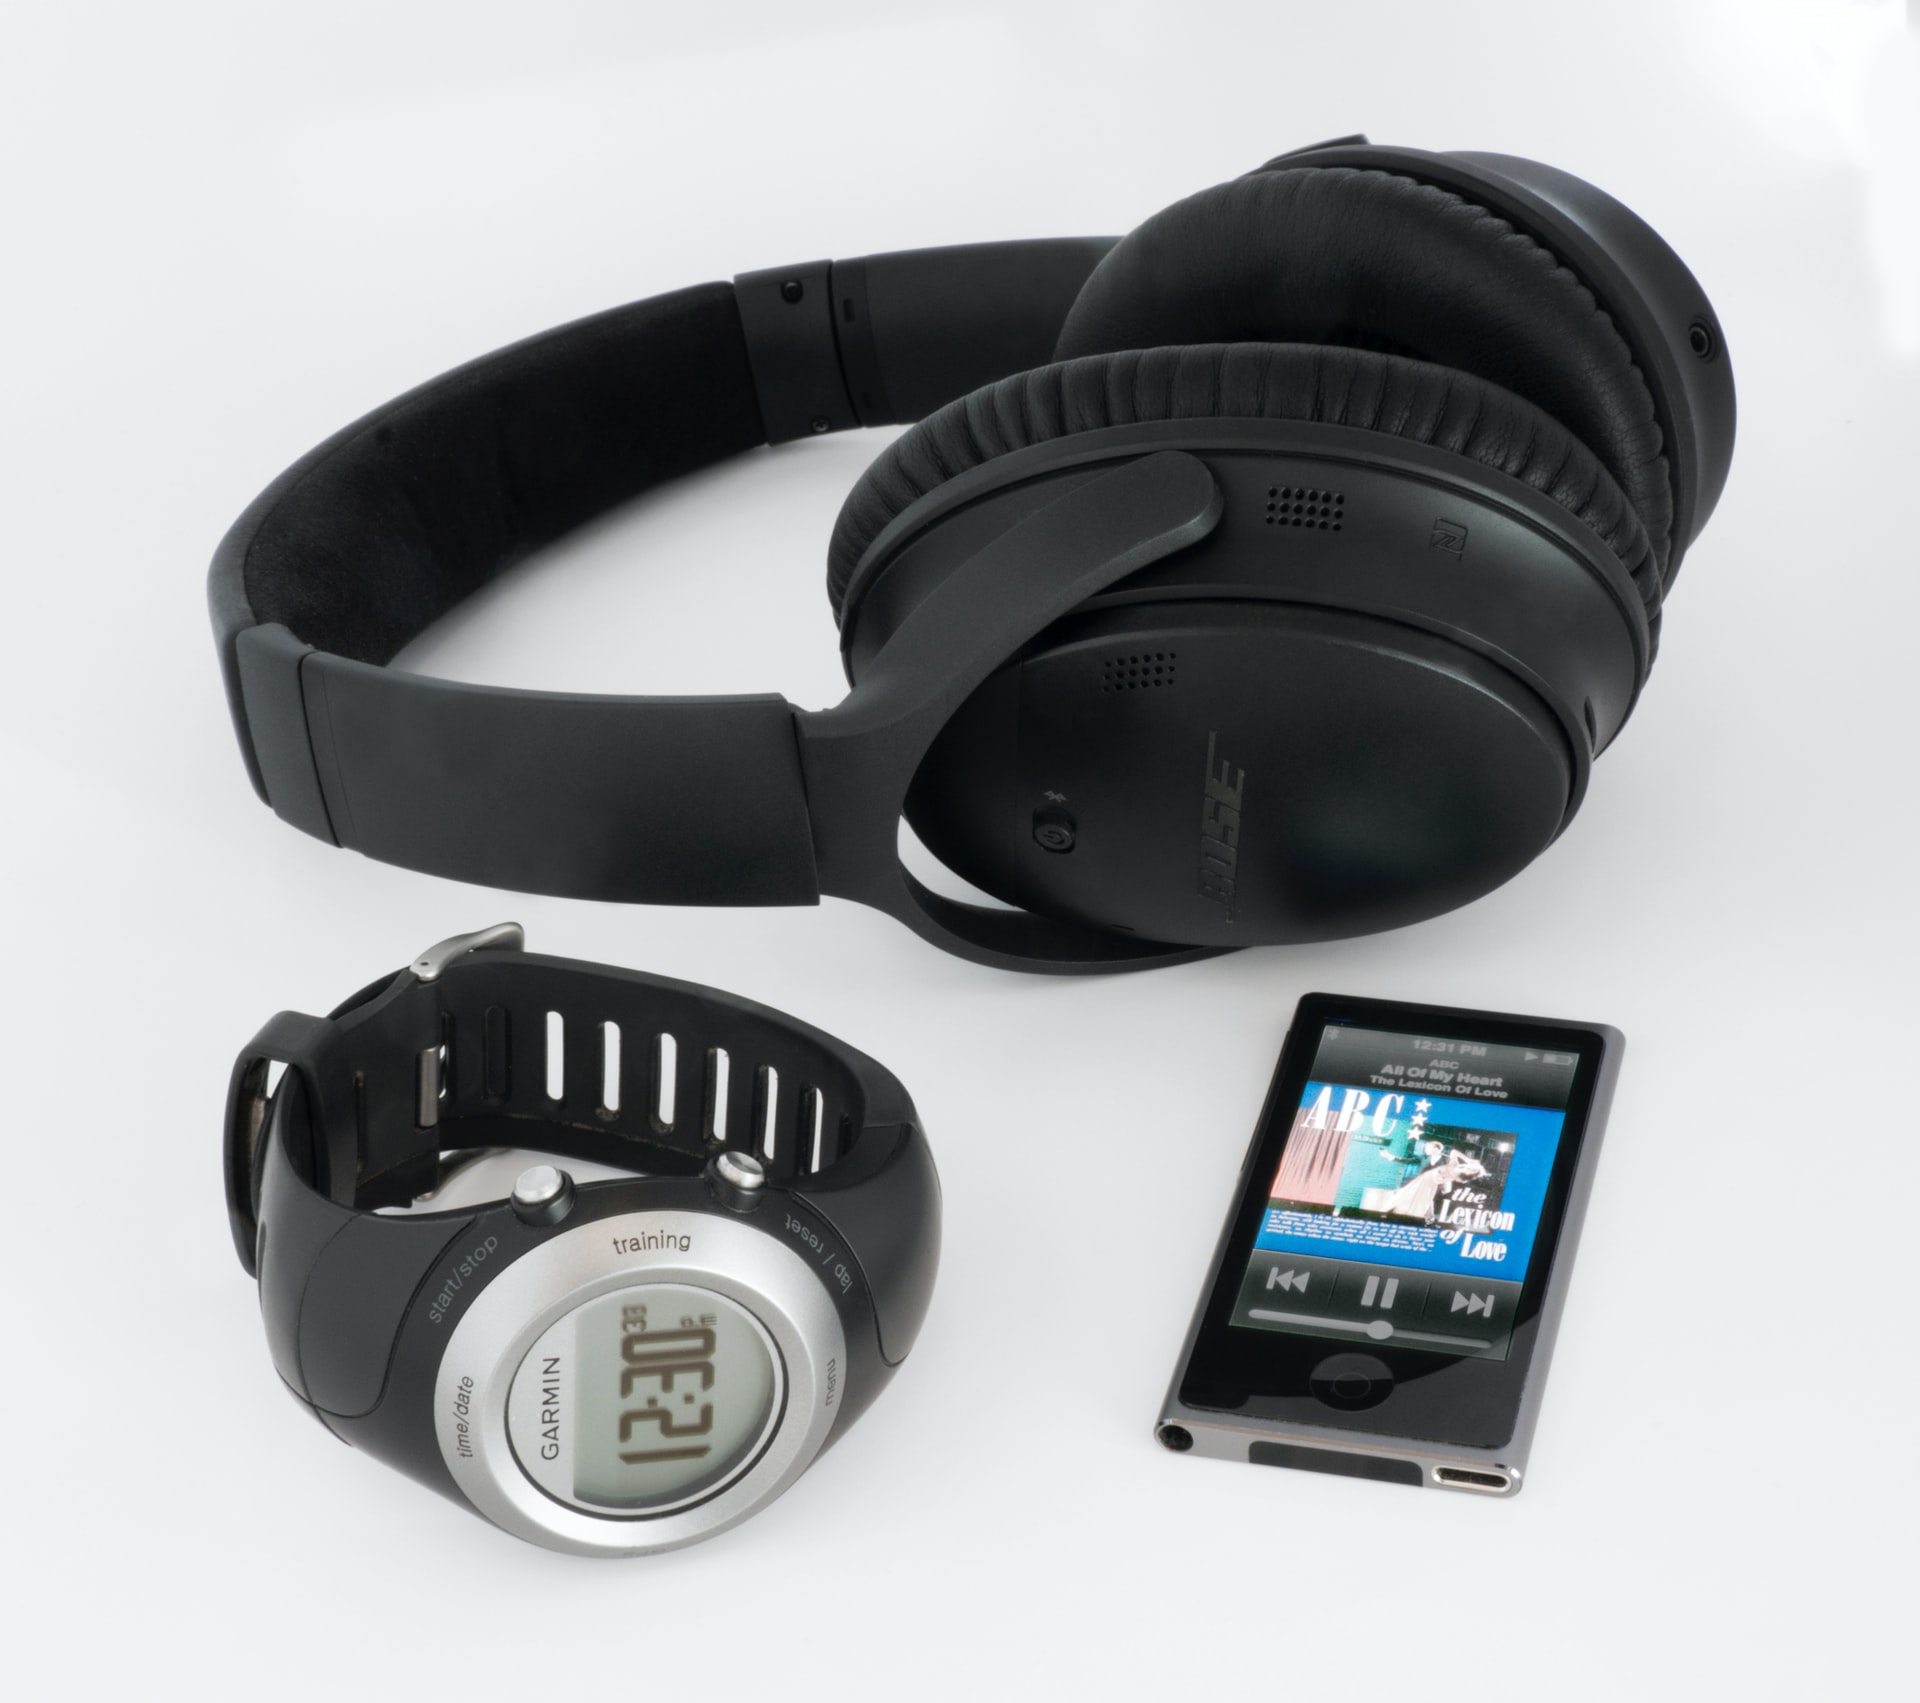 black Bose wireless headphones near smartwatch and iPod